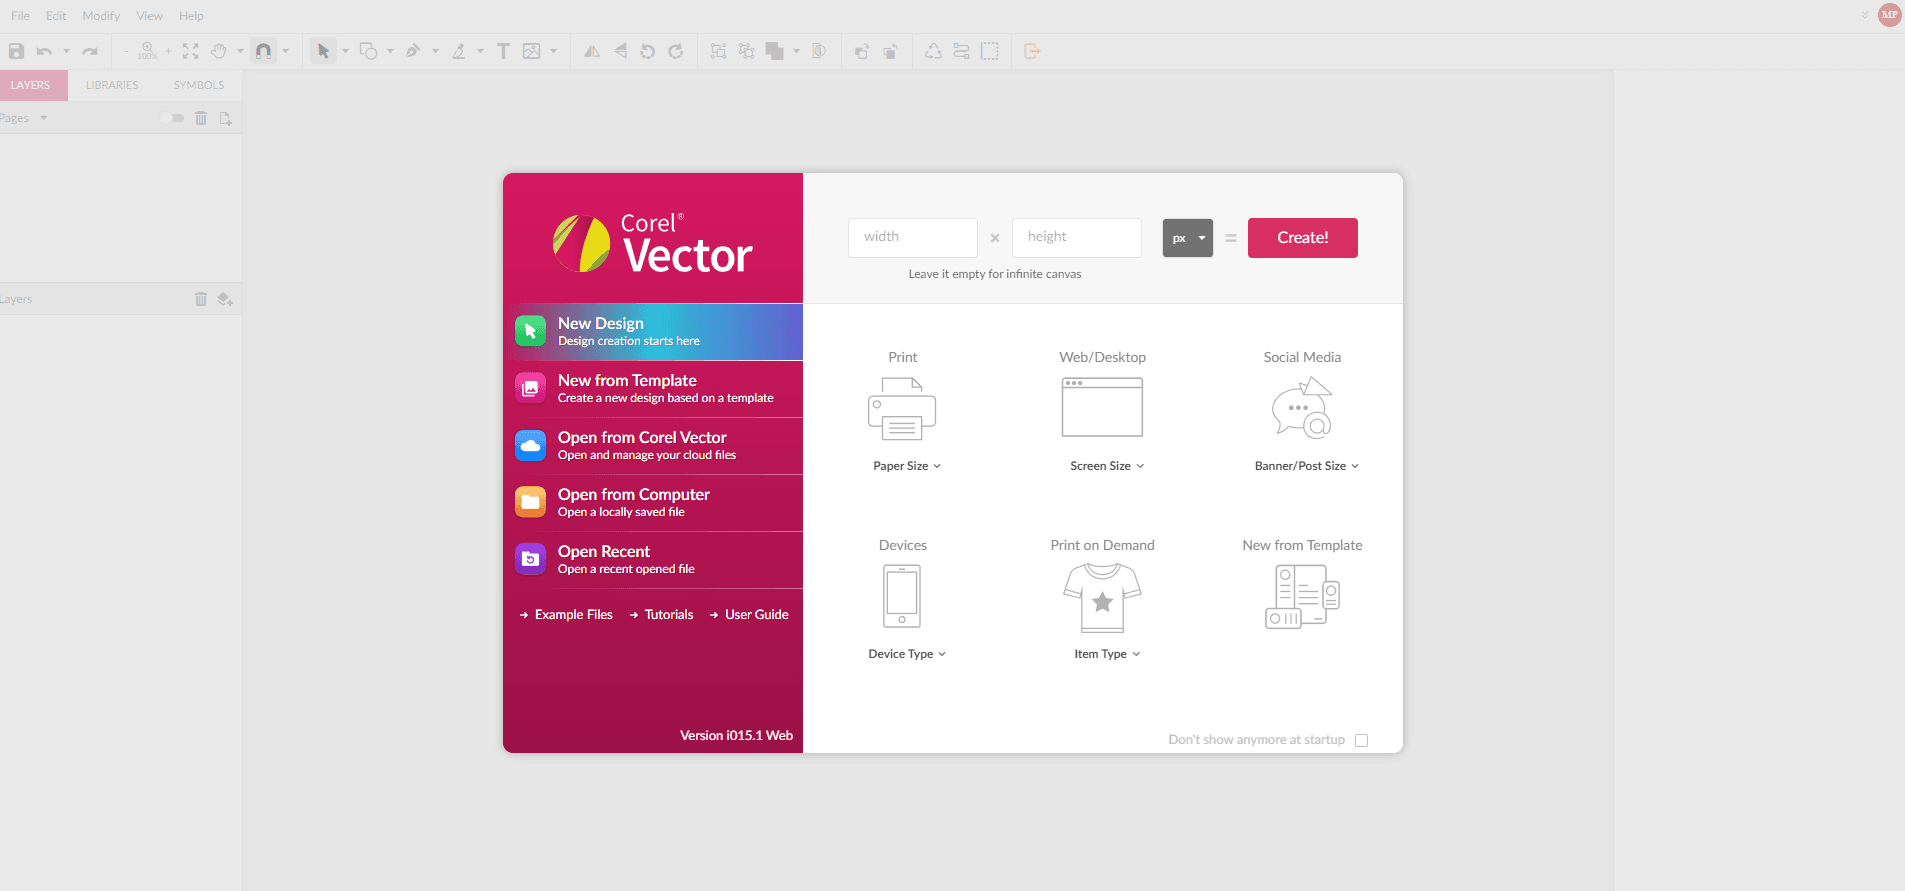 Corel Vector - Professional Image Editing